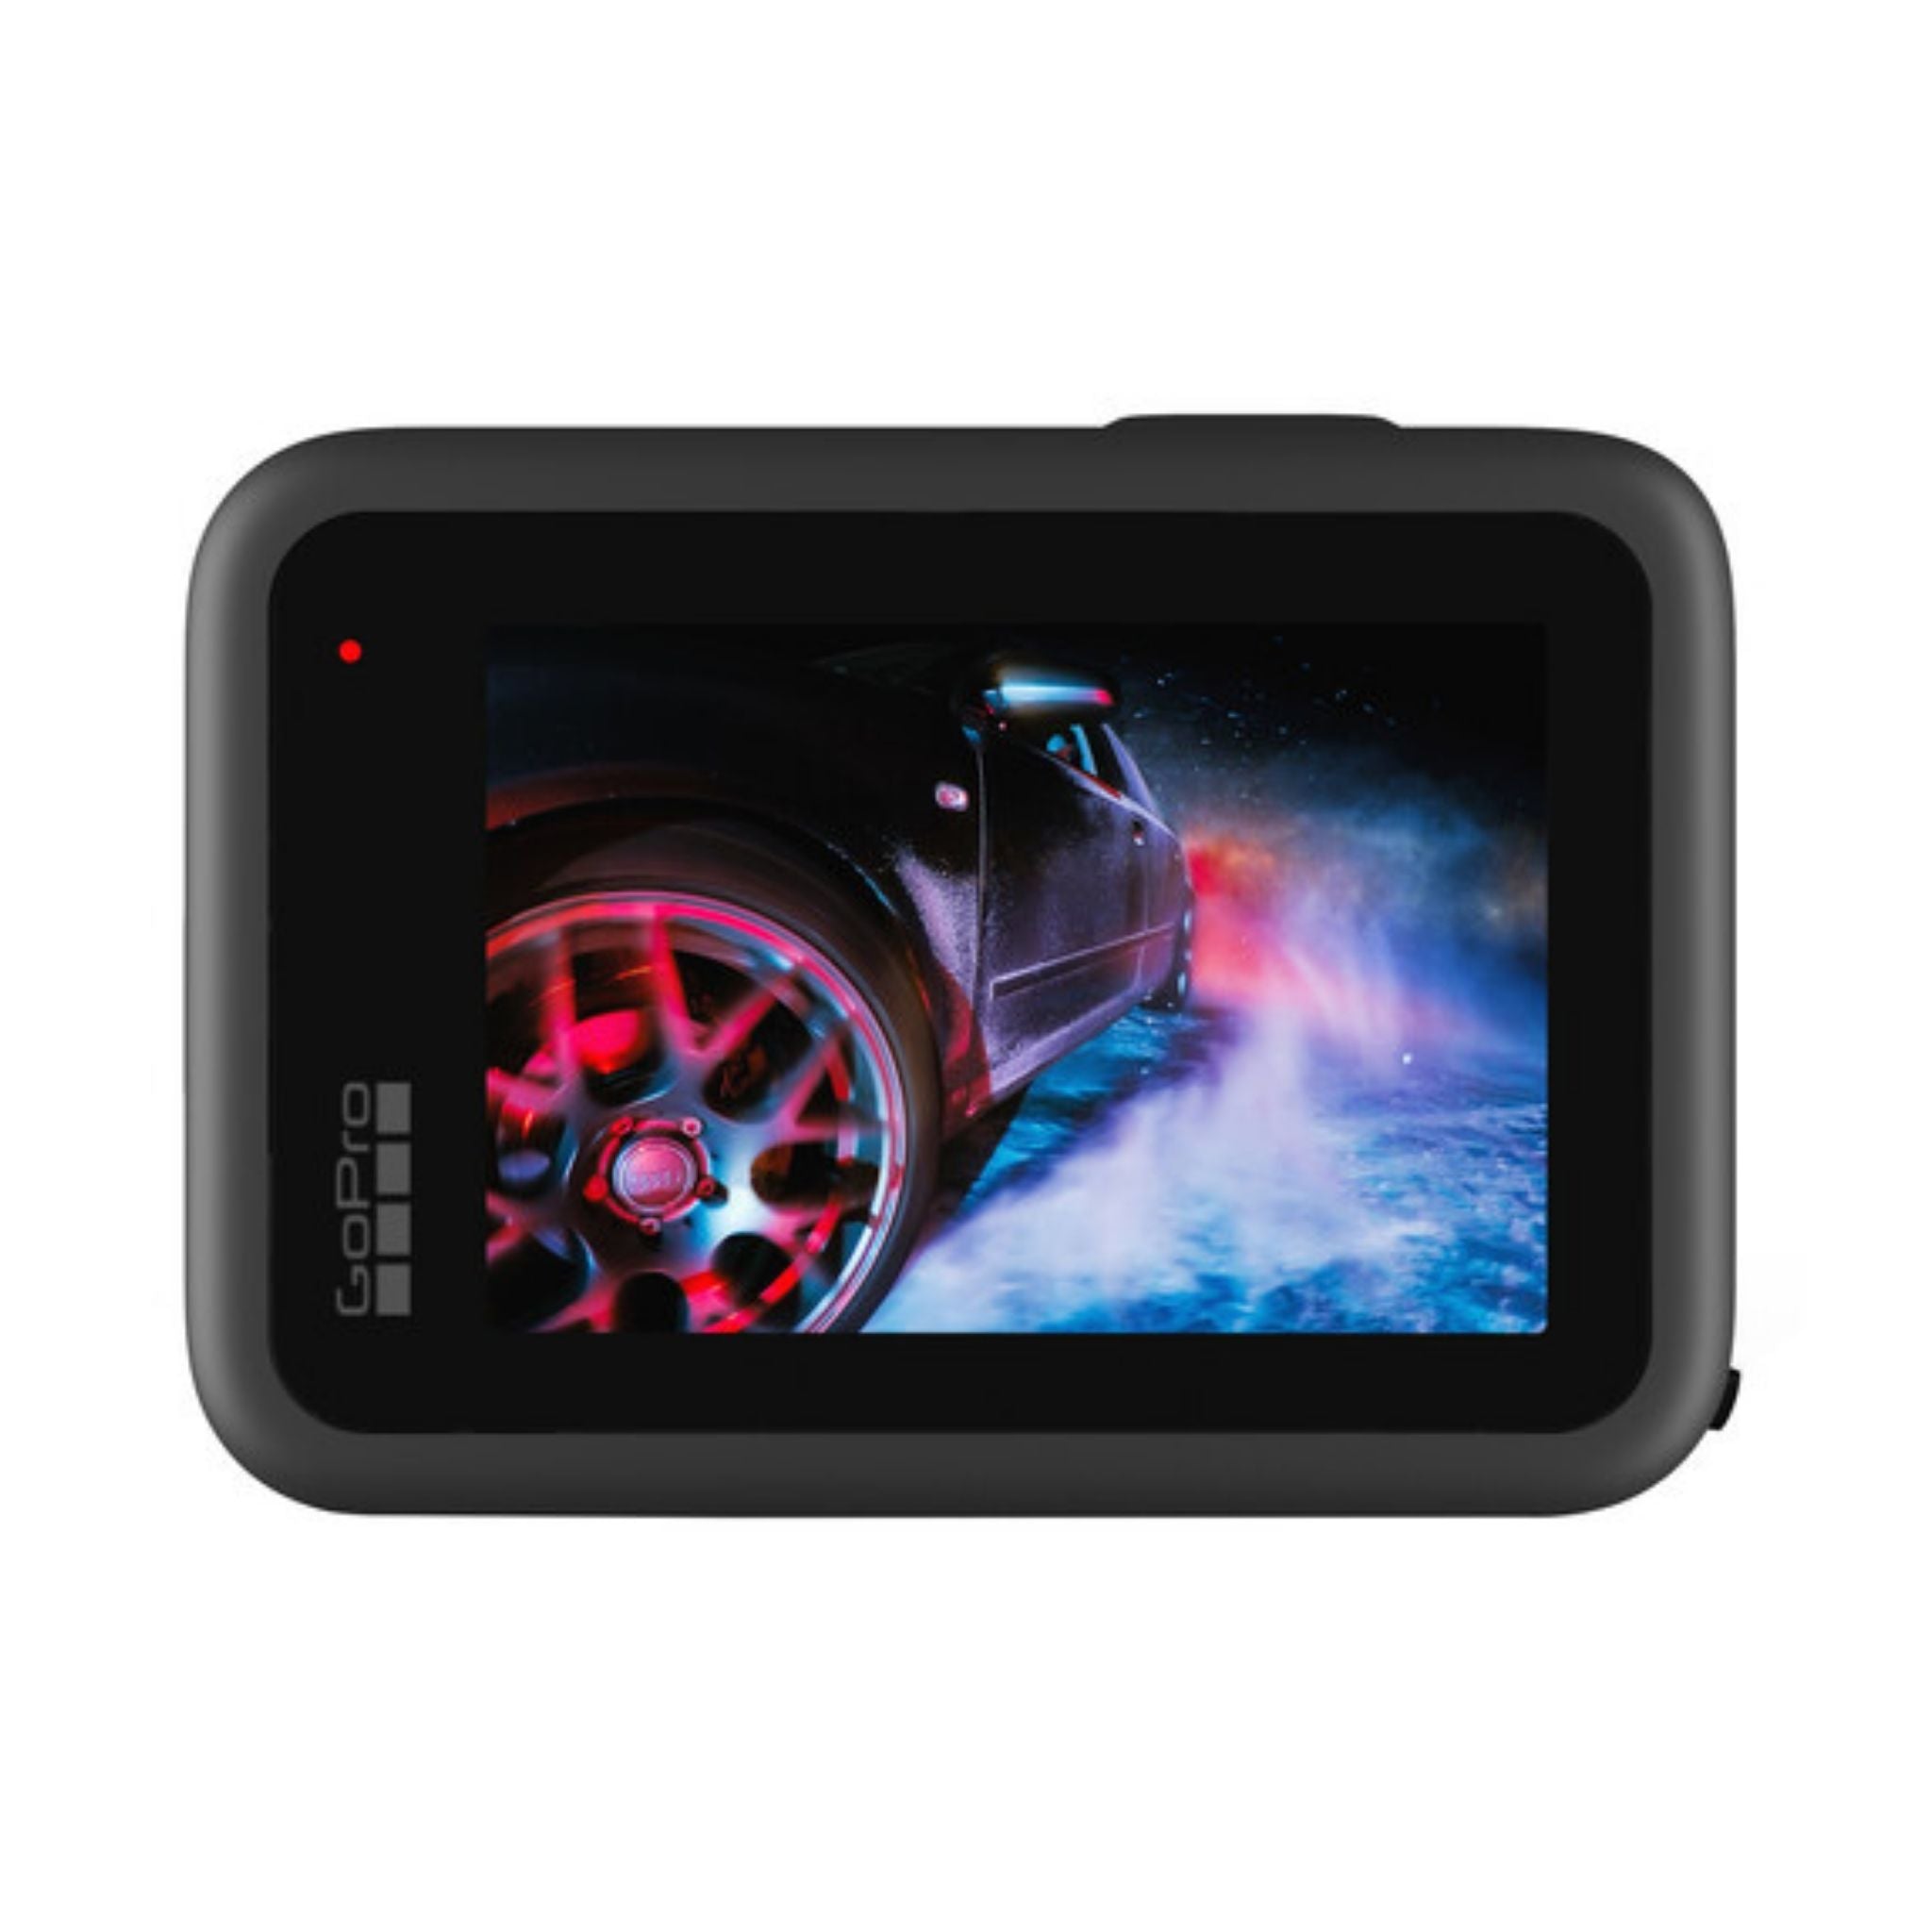 GoPro HERO9 - Black 5K Video Streaming Action Camera - AVStore